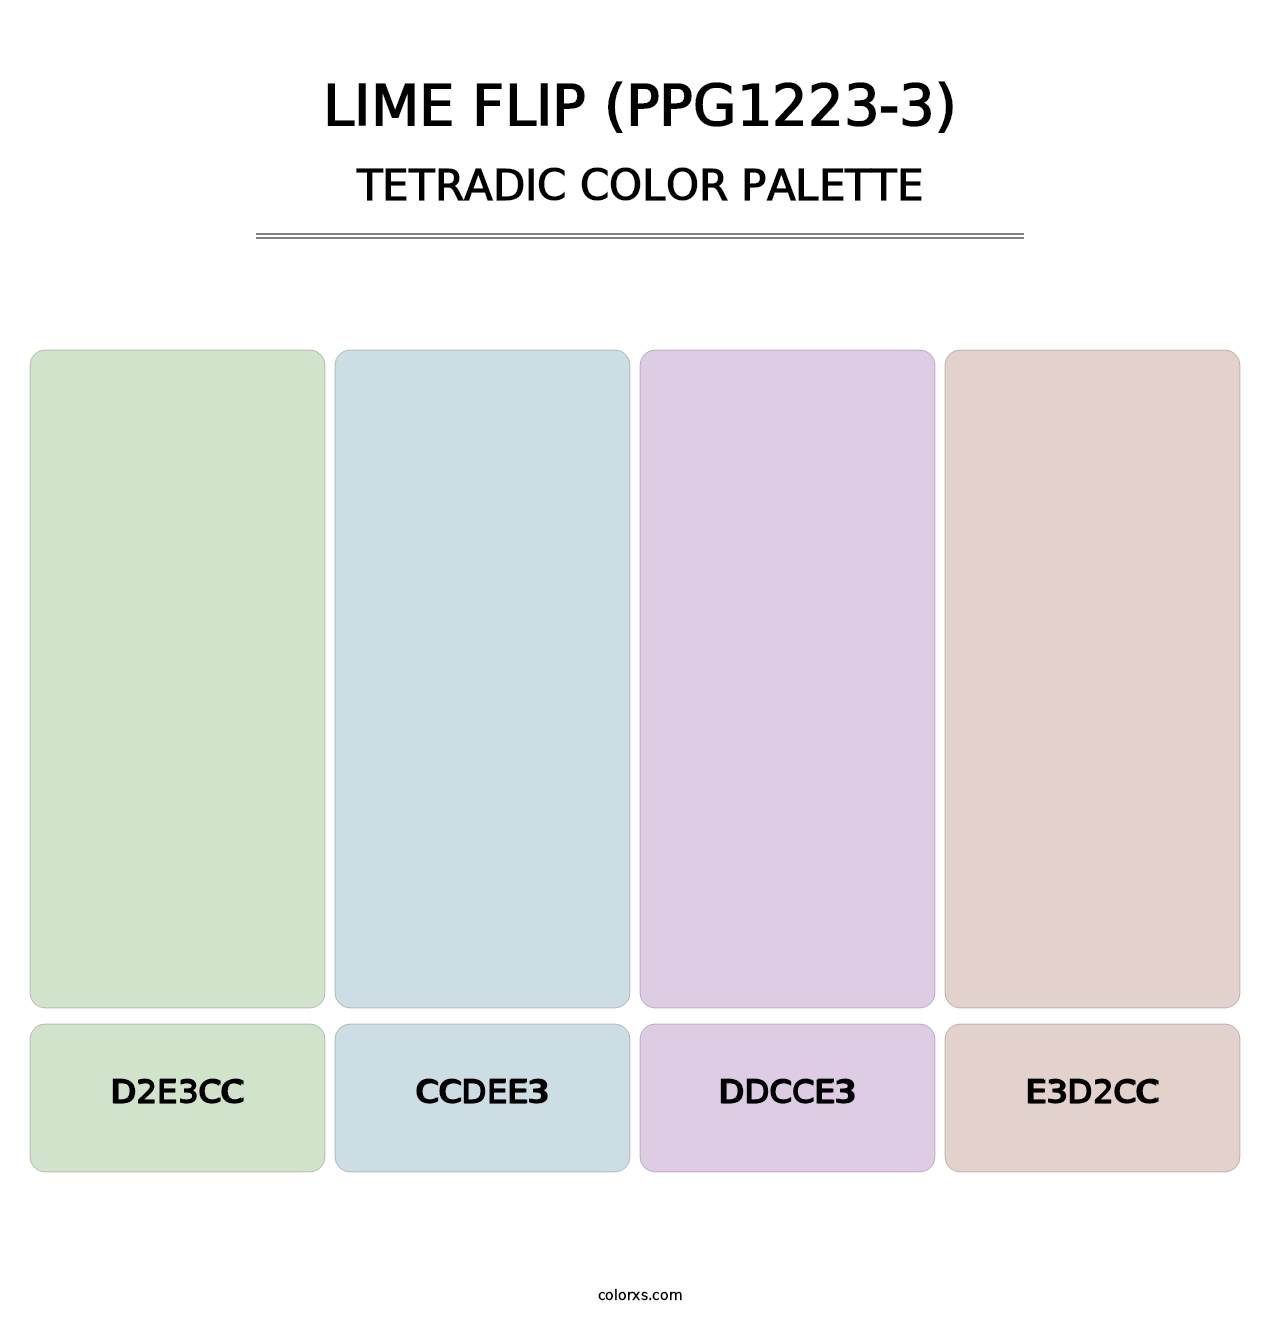 Lime Flip (PPG1223-3) - Tetradic Color Palette